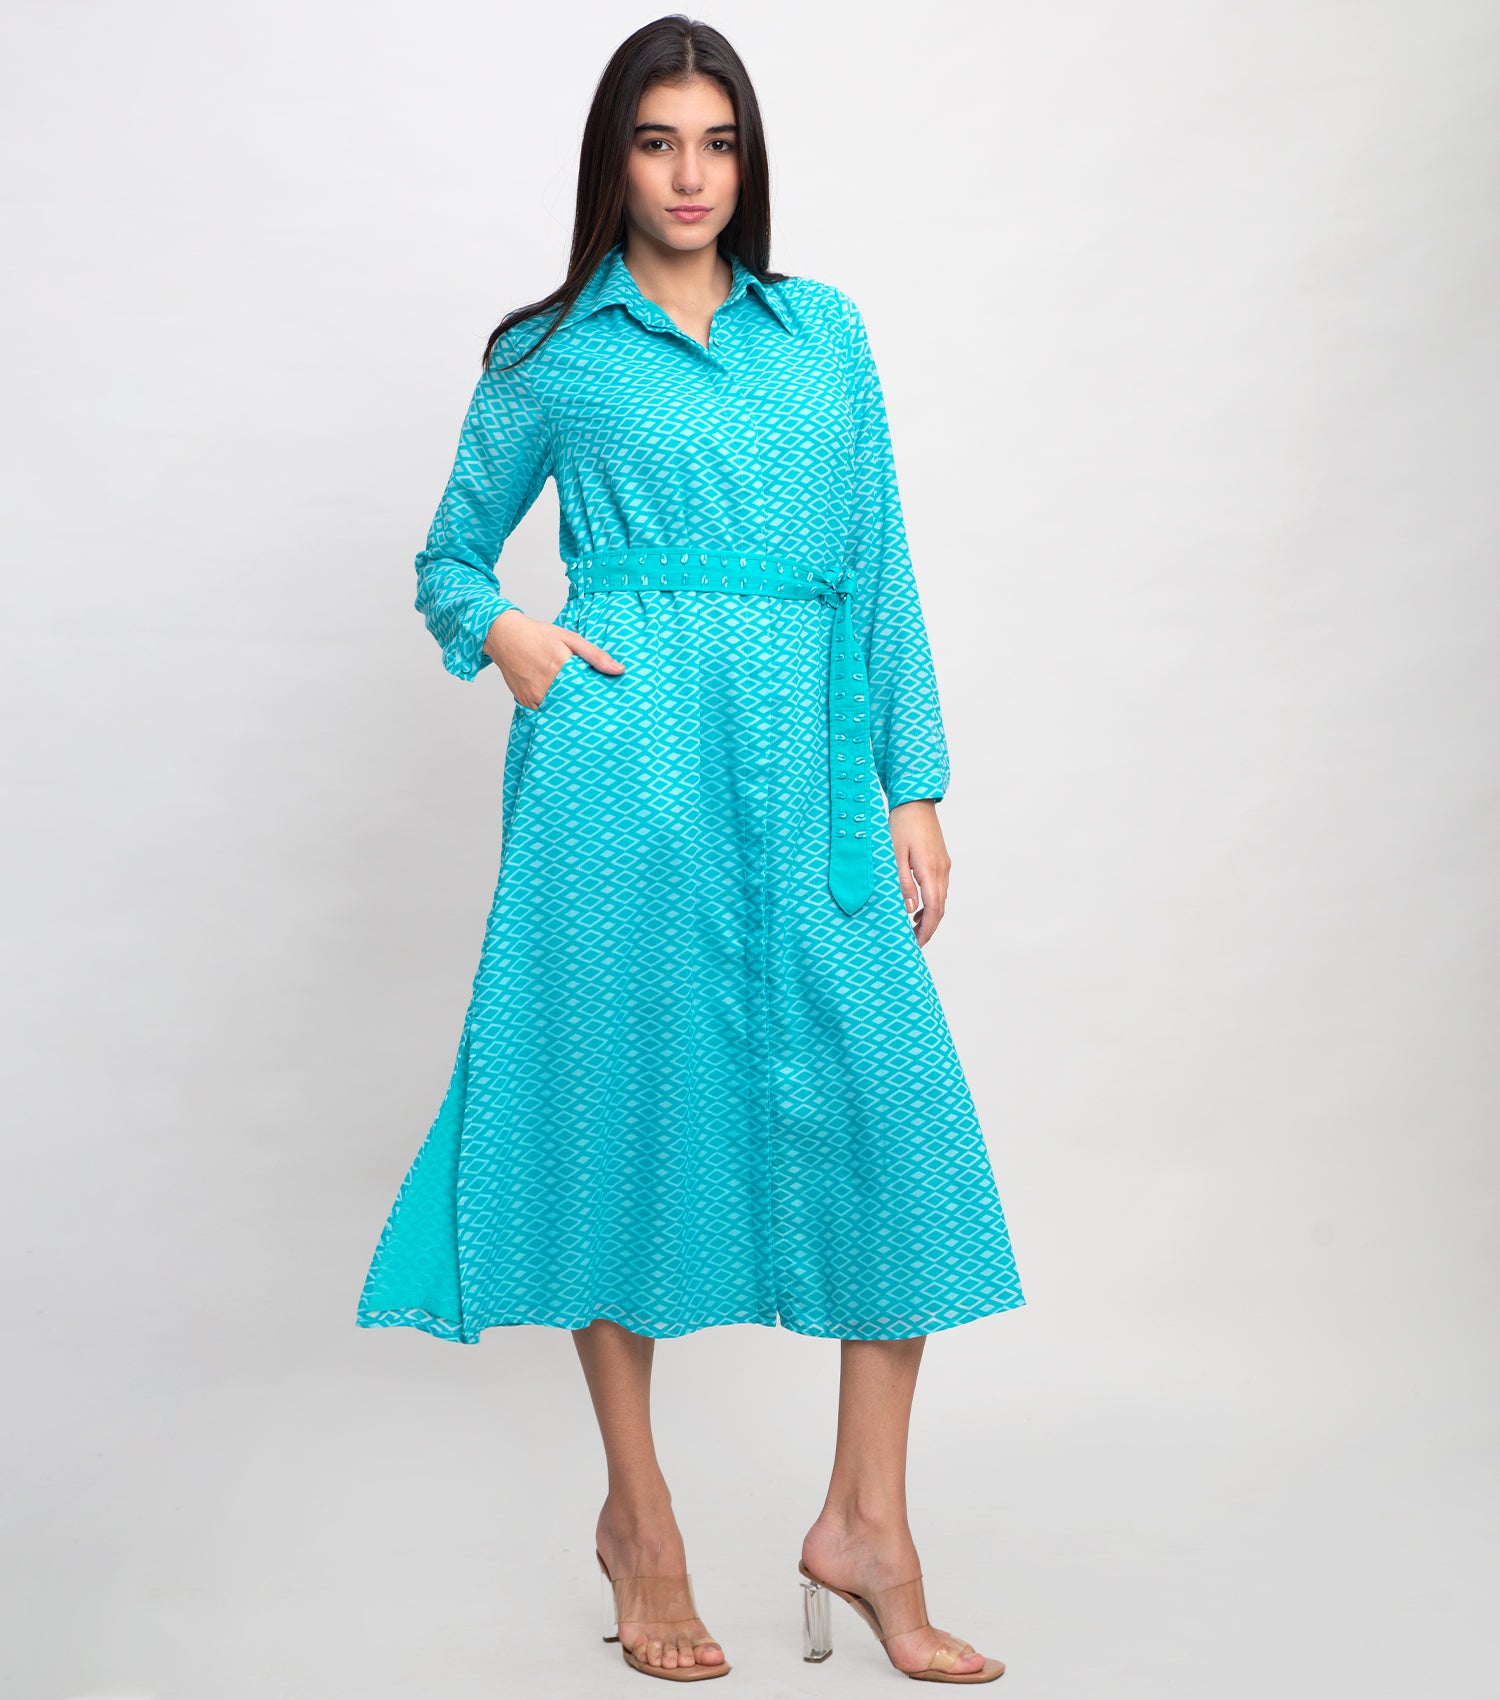 Aqua Blue Cotton Printed Shirt Dress with Belt & Lace Detail